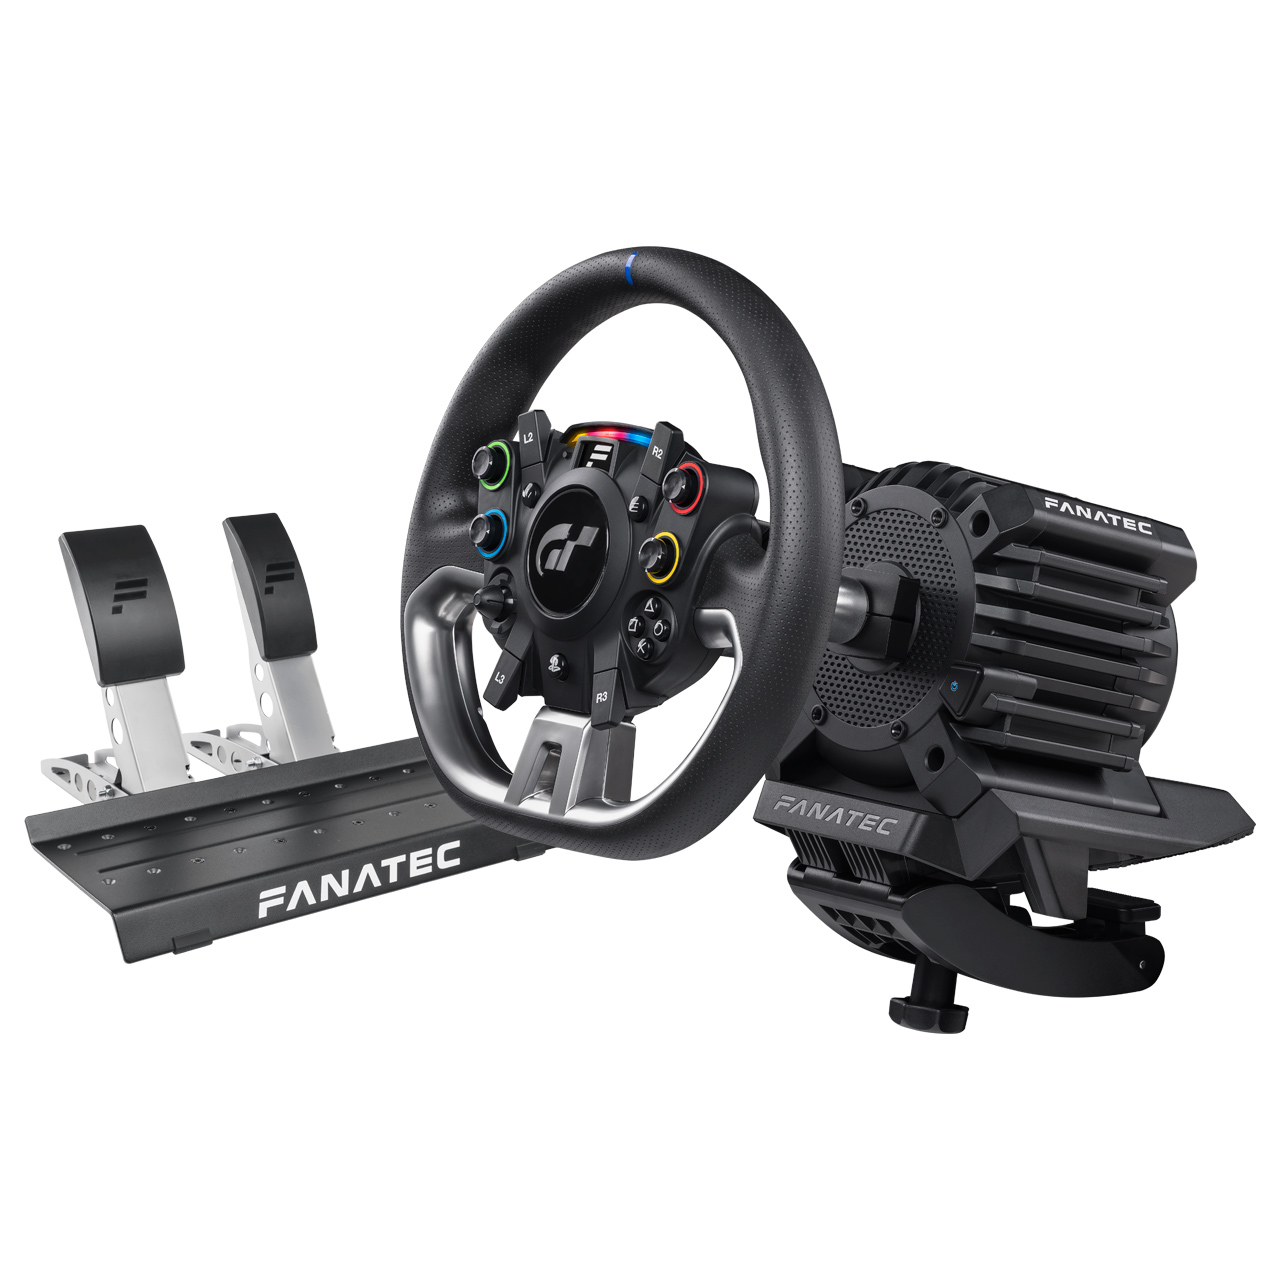 The 'Gran Turismo DD Pro' Official Direct Drive Steering Wheel Pre 